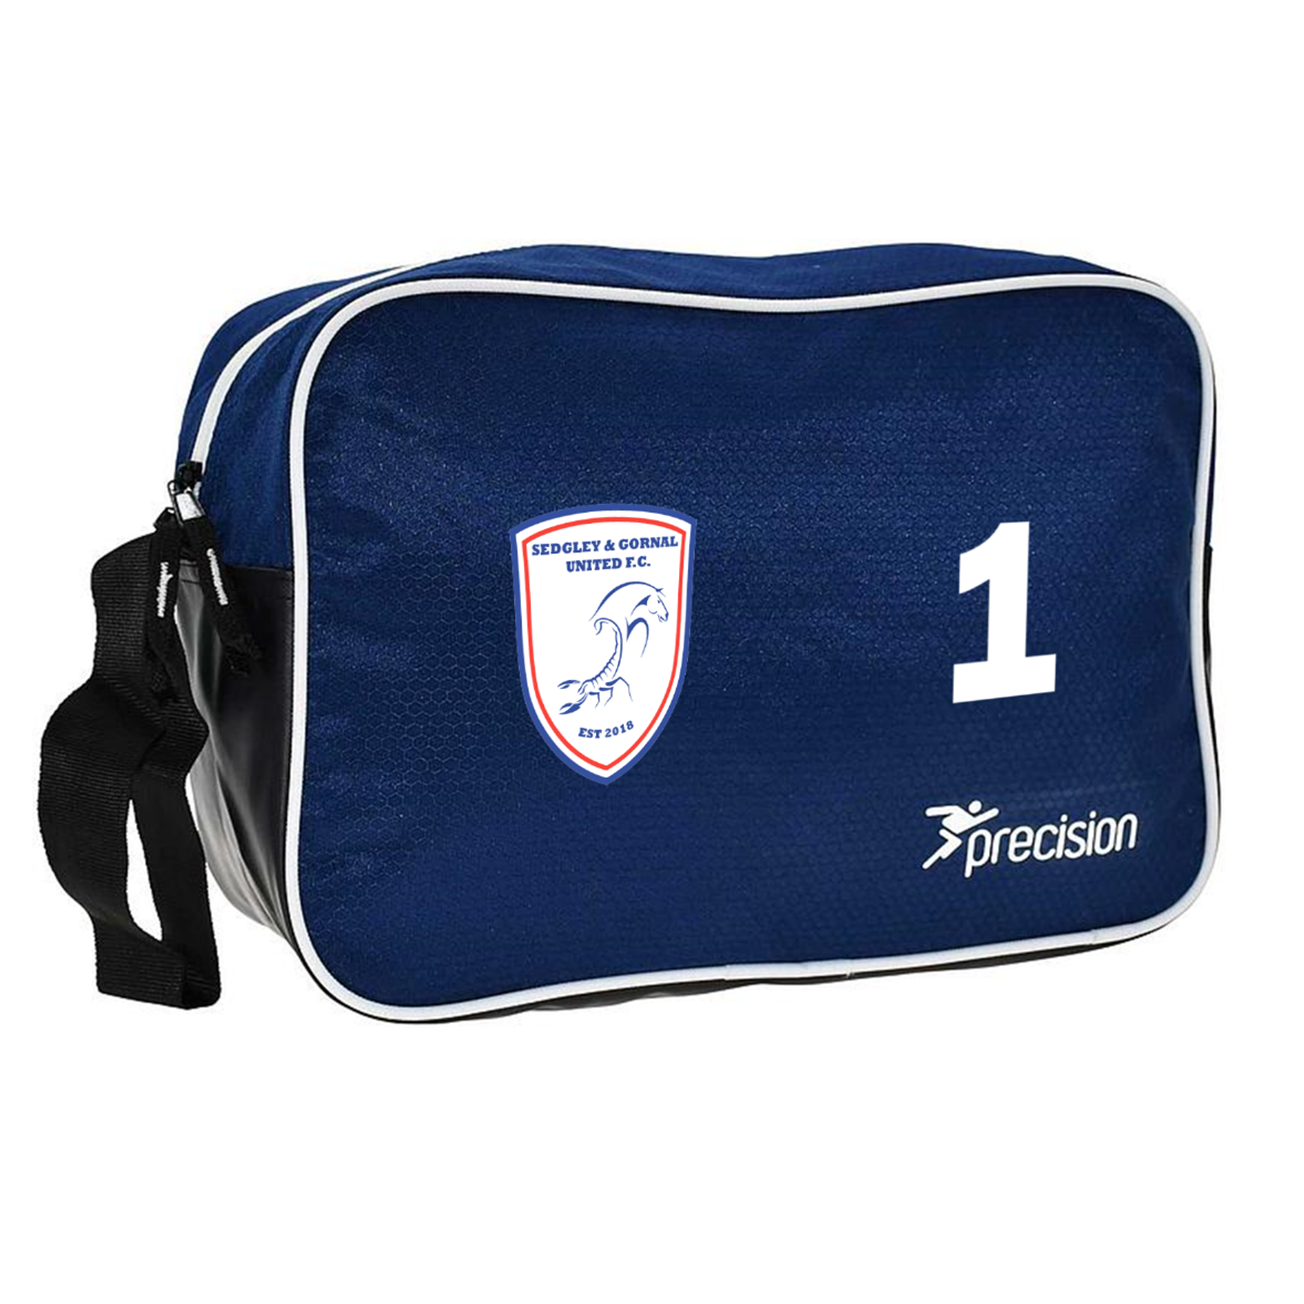 Sedgley & Gornal United FC - Goal Keeping Glove Bag